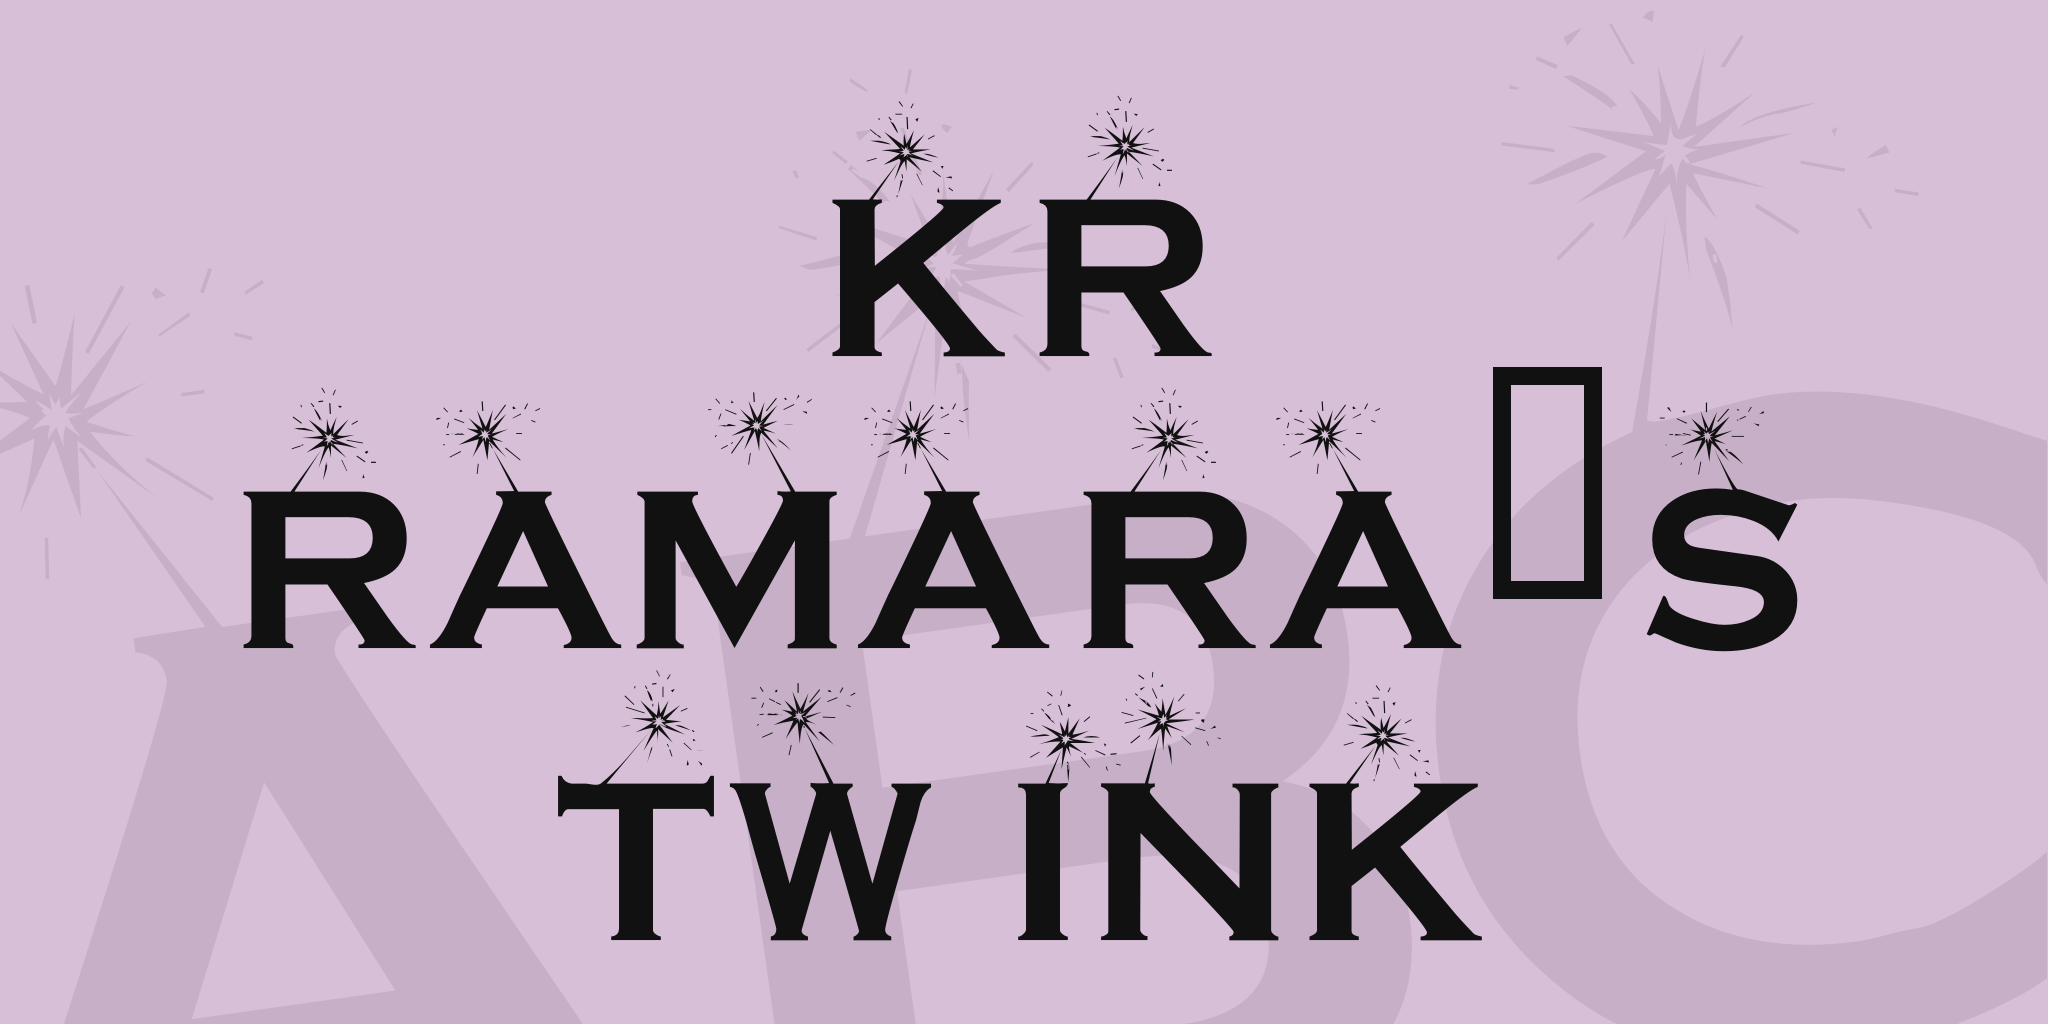 Kr Ramaras Twink